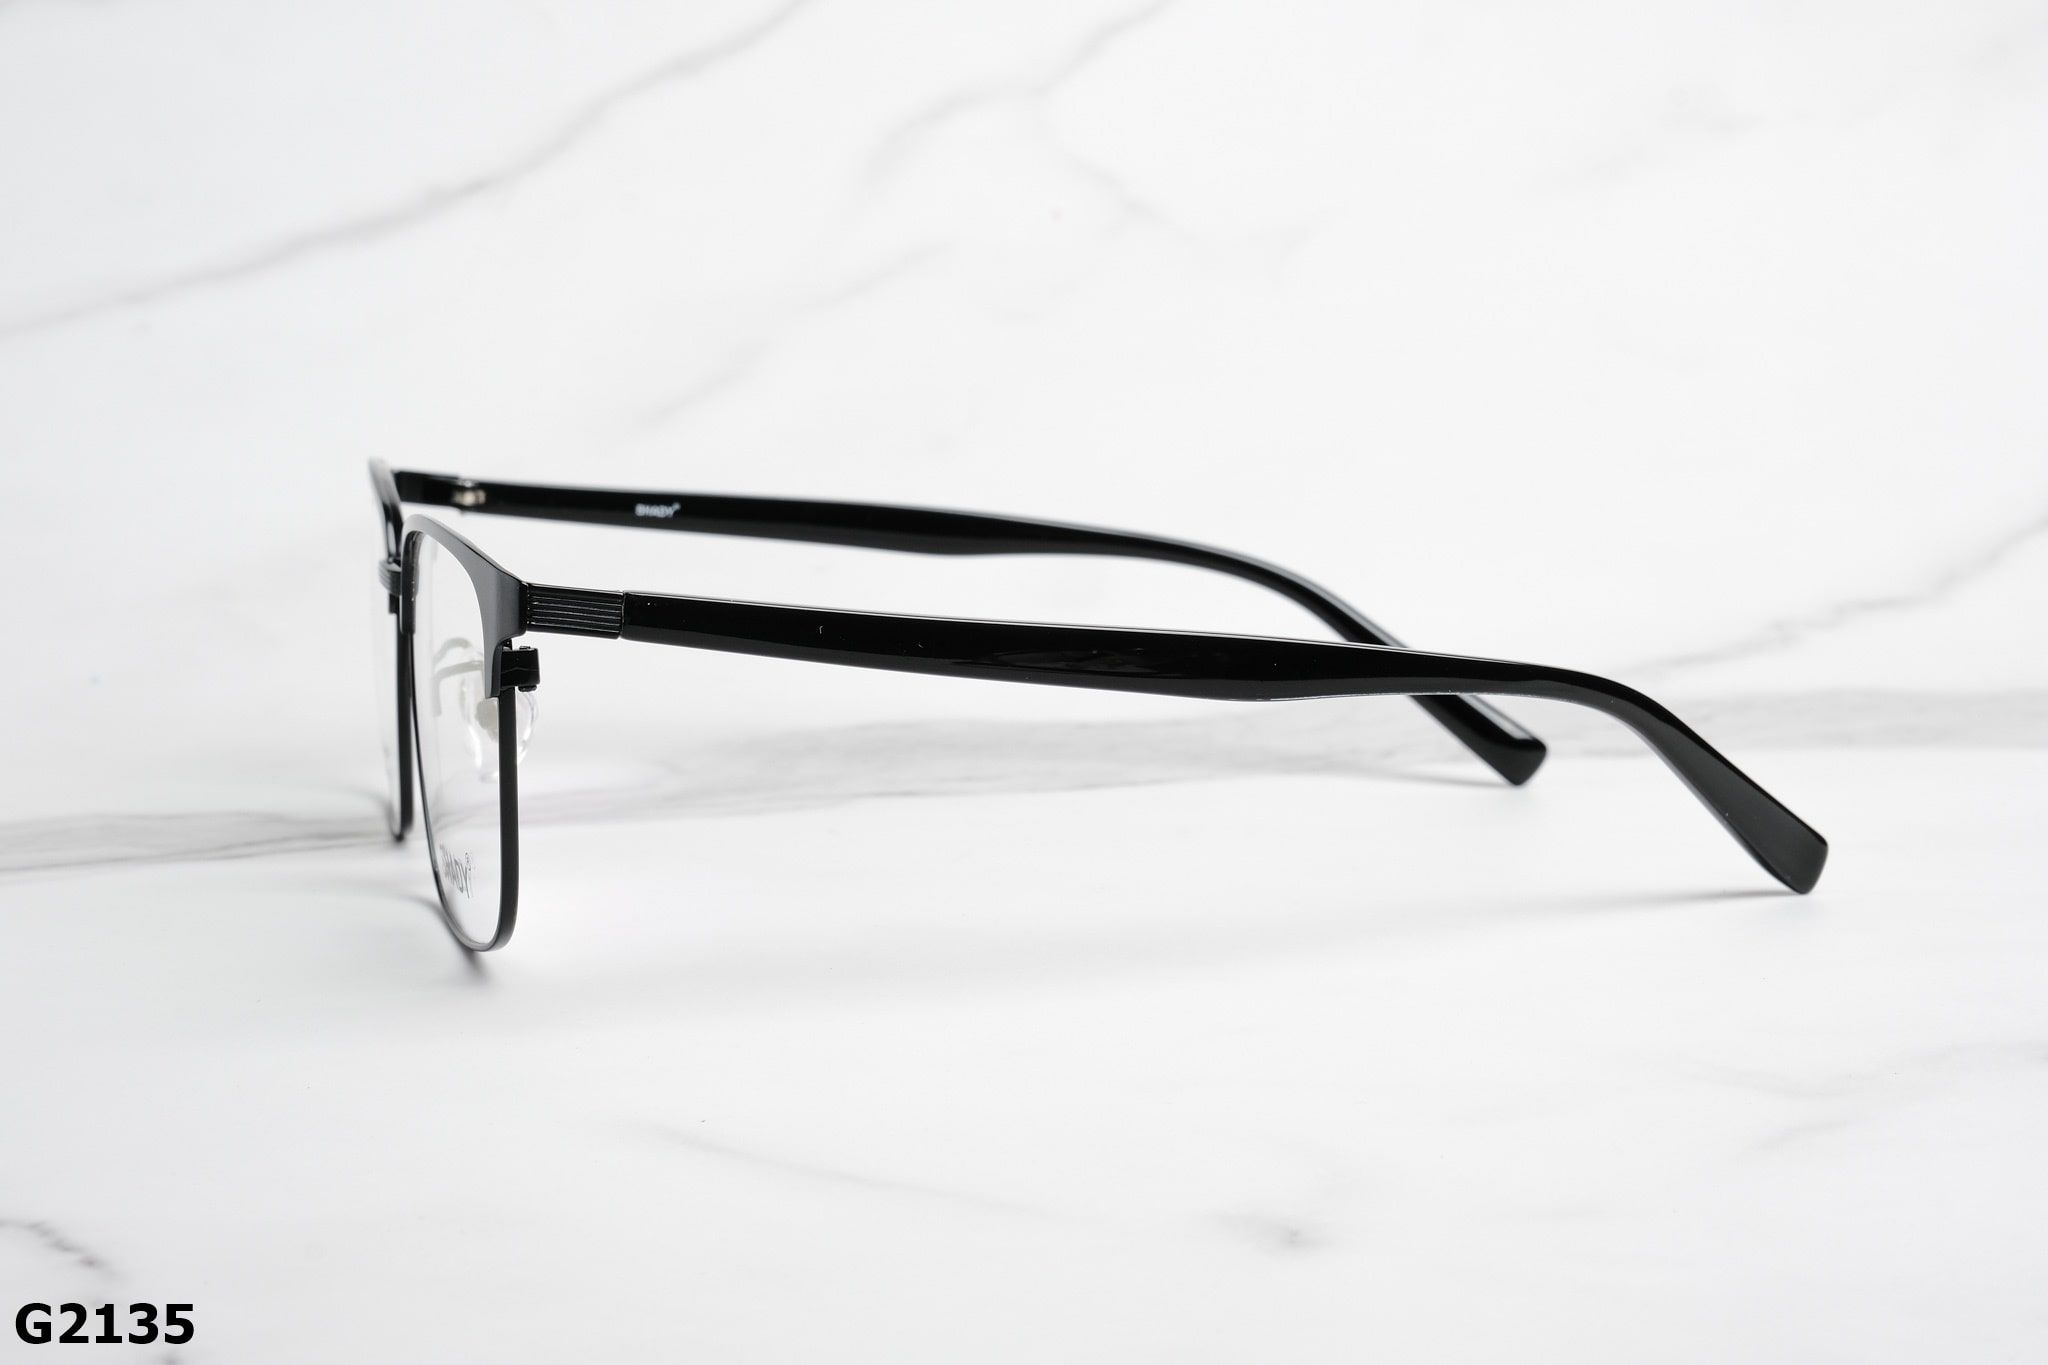  SHADY Eyewear - Glasses - G2135 